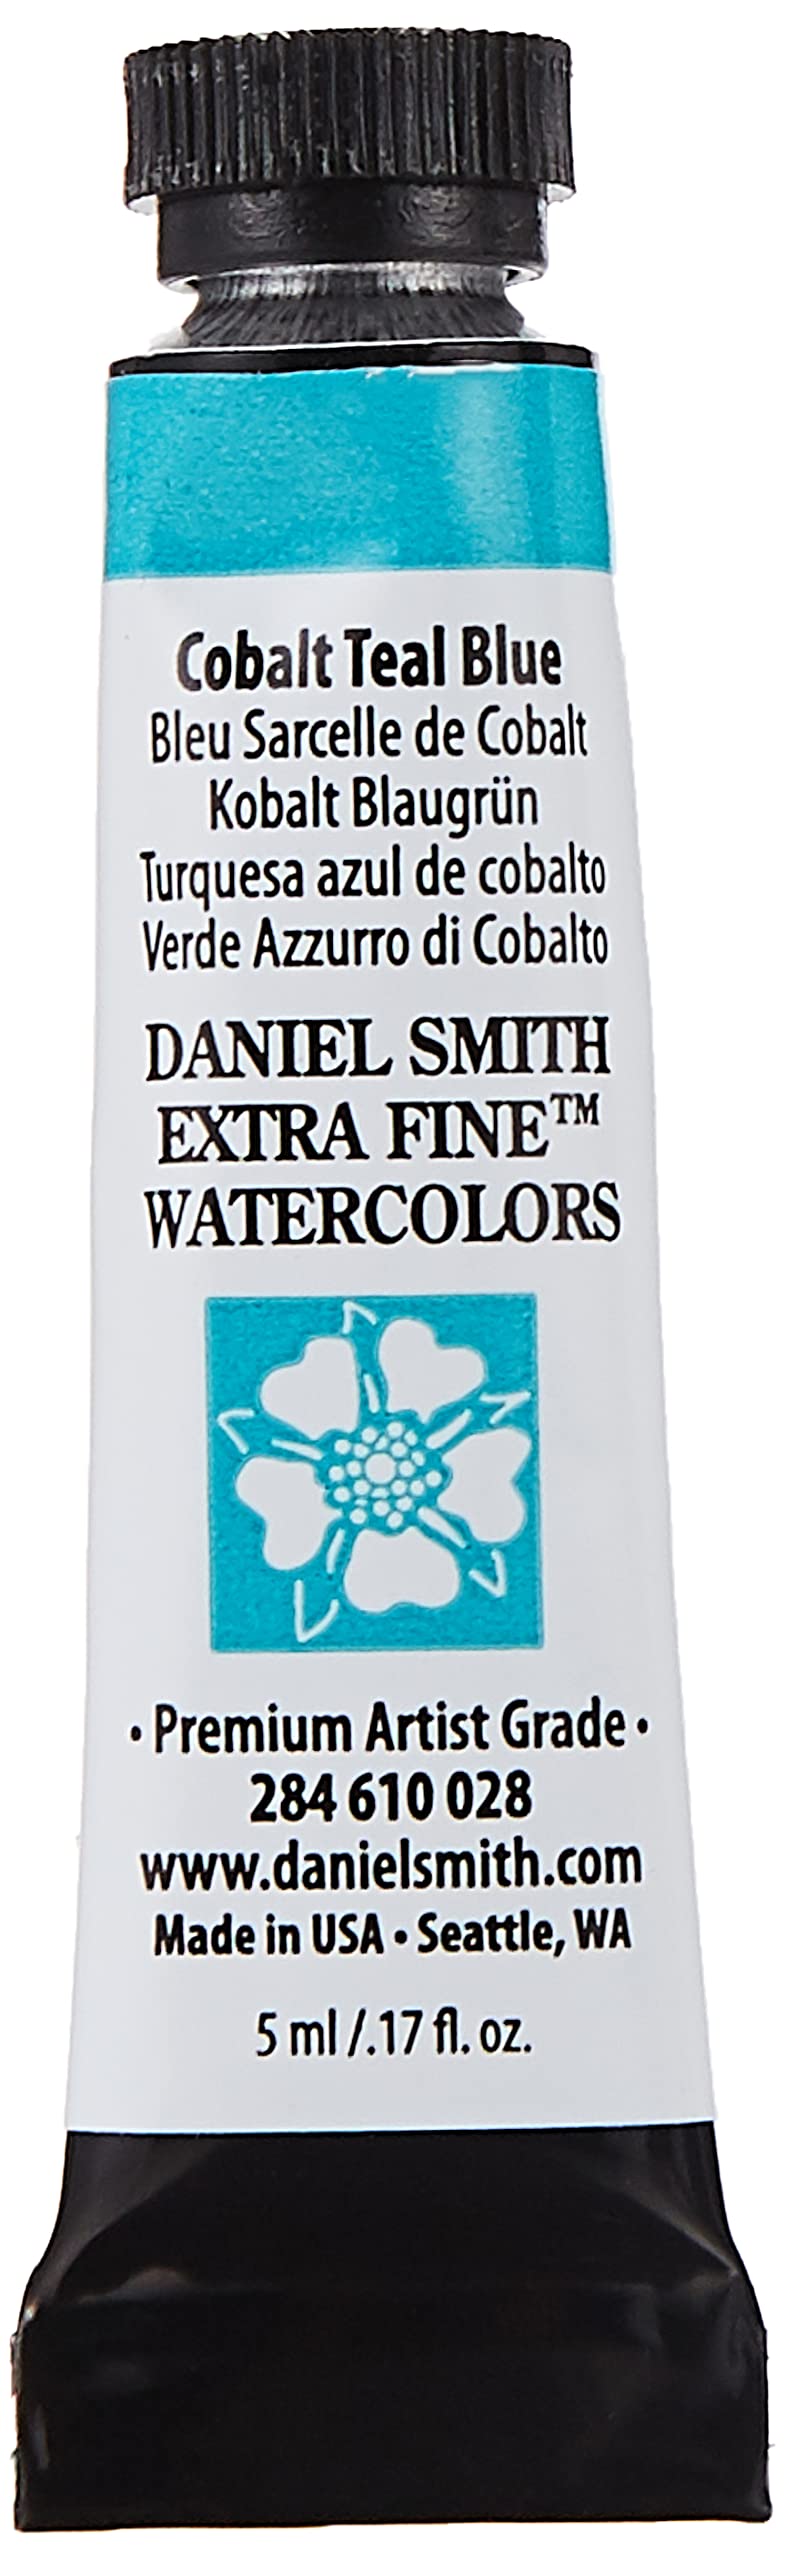 Daniel Smith Extra Fine Watercolor Paint, 5Ml Tube, Cobalt Teal Blue, 284610028